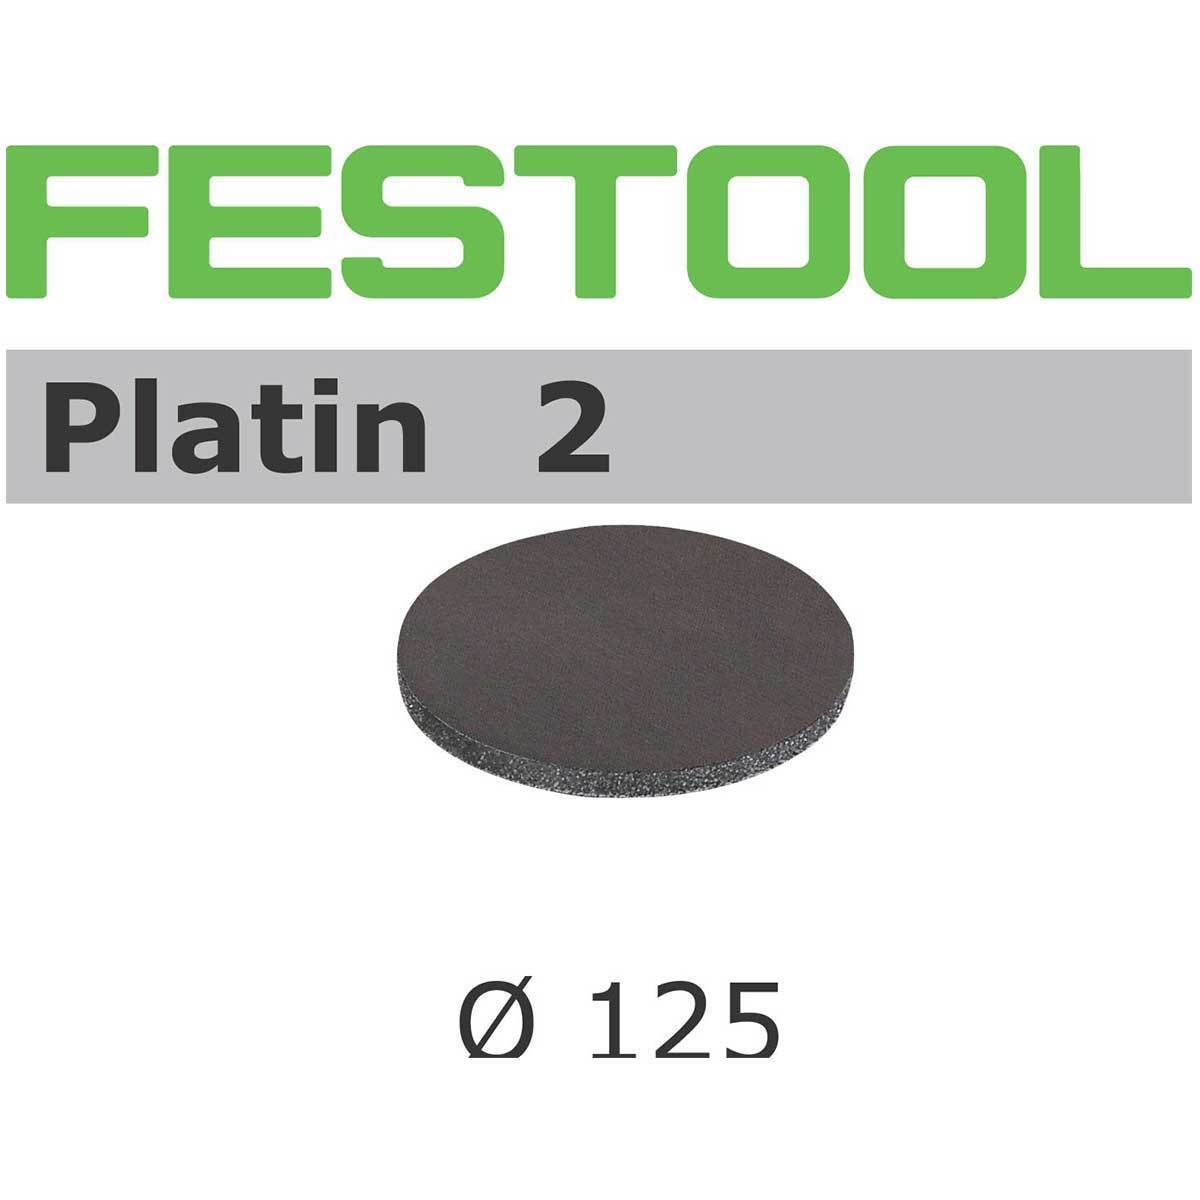 Festool 125mm Platin 2 abrasive discs are foam-backed silicon carbide abrasives for super-fine finishing.